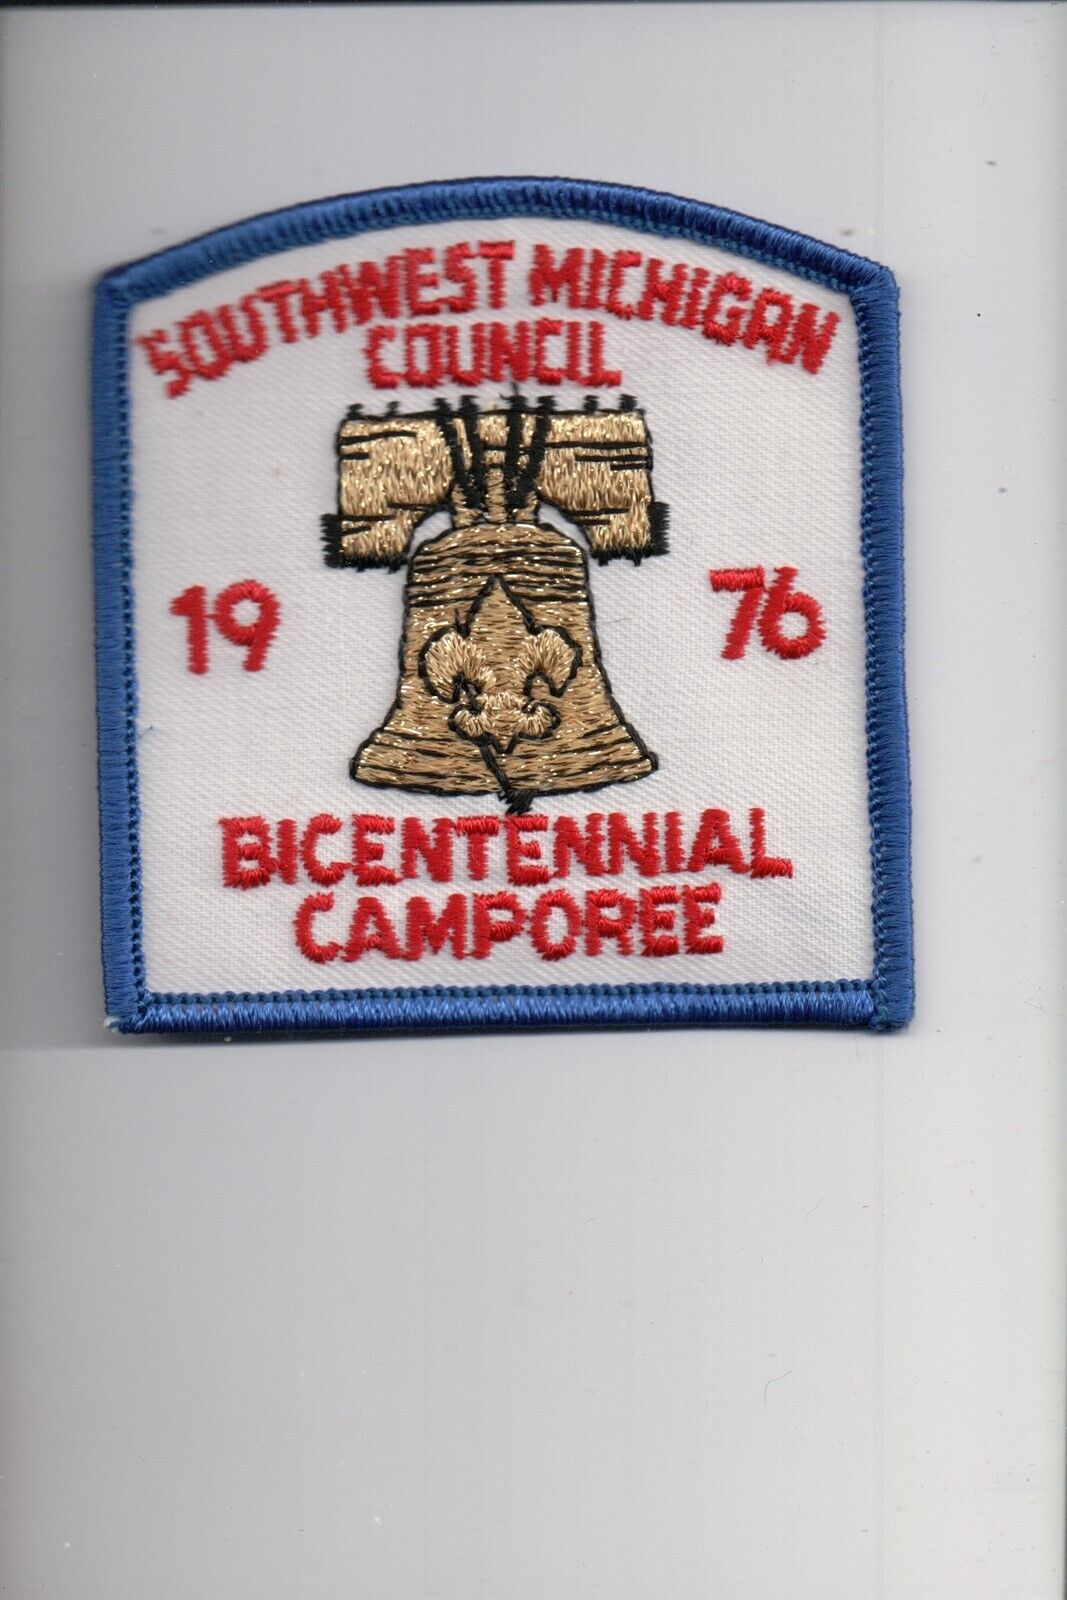 1976 Southwest Mchigan Council Bicentennial Camporee patch